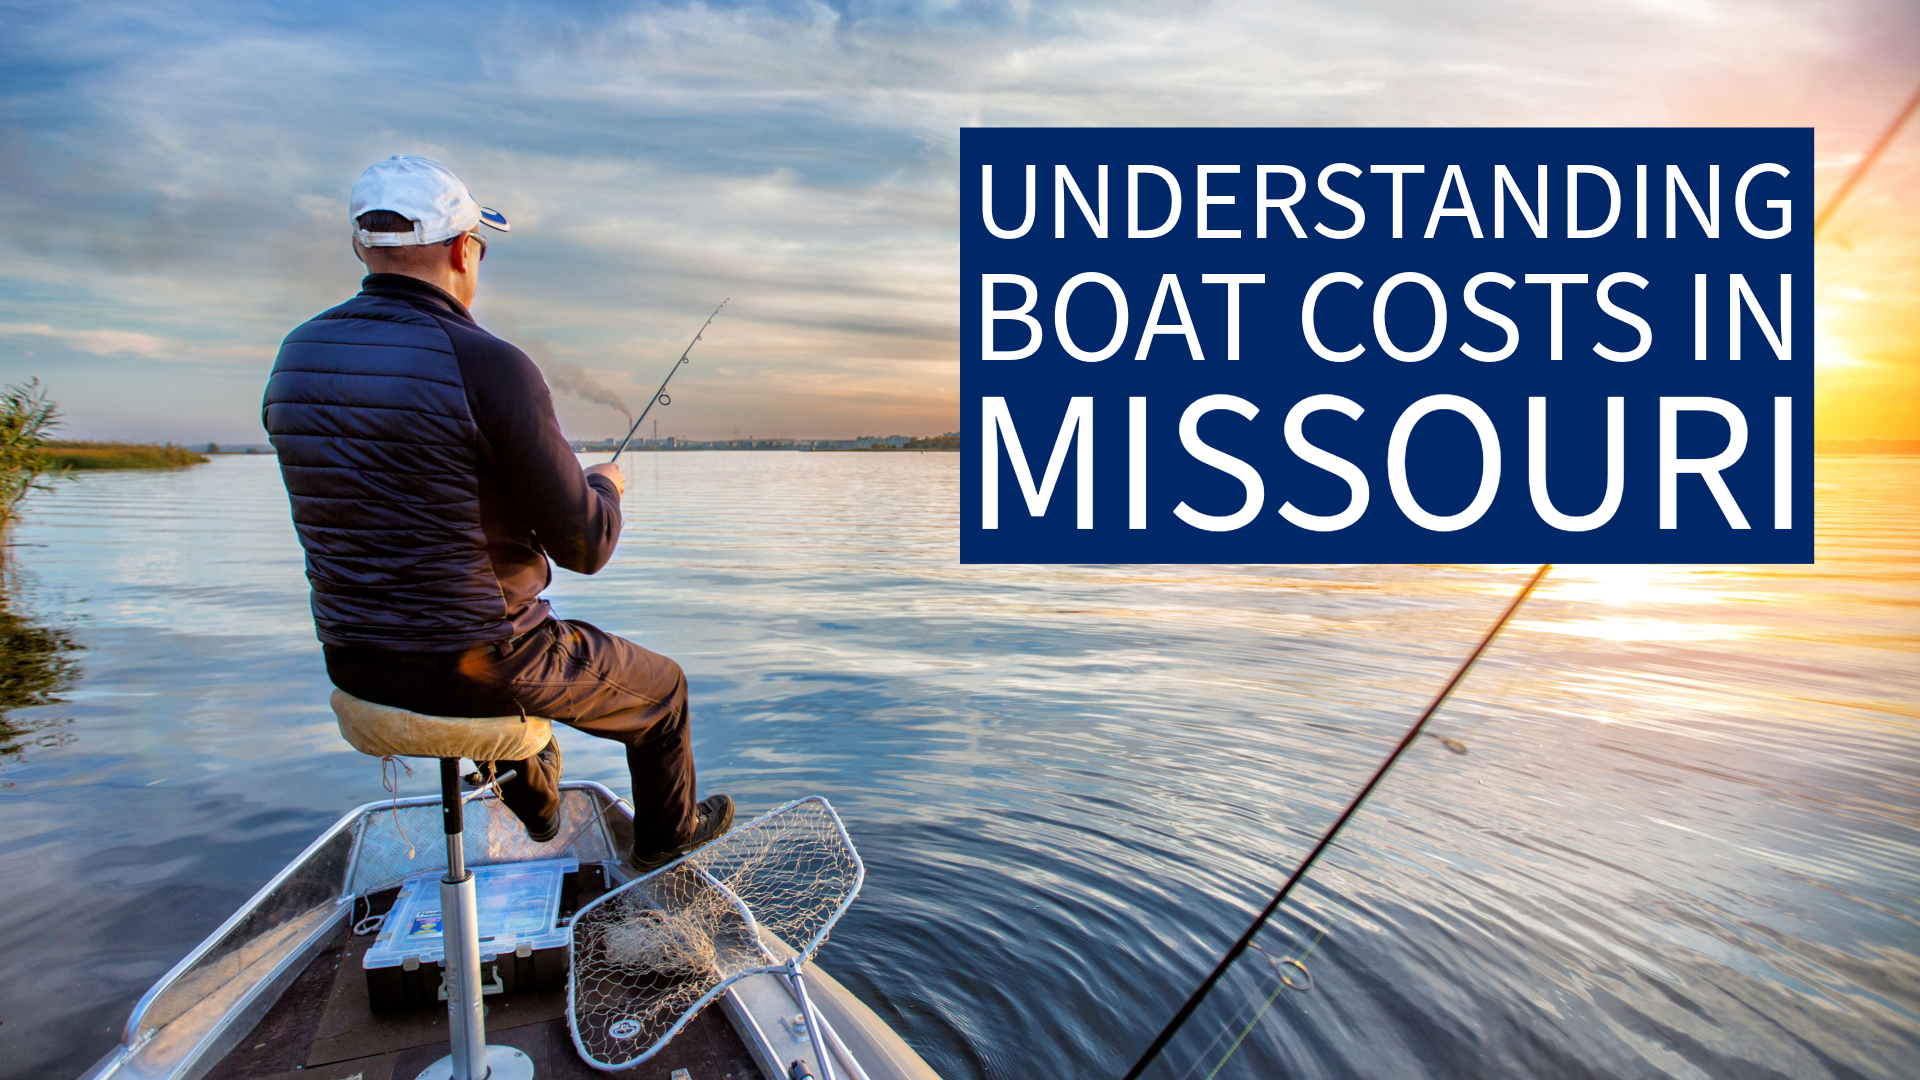 Guy fishing in boat - Understanding boat costs in Missouri